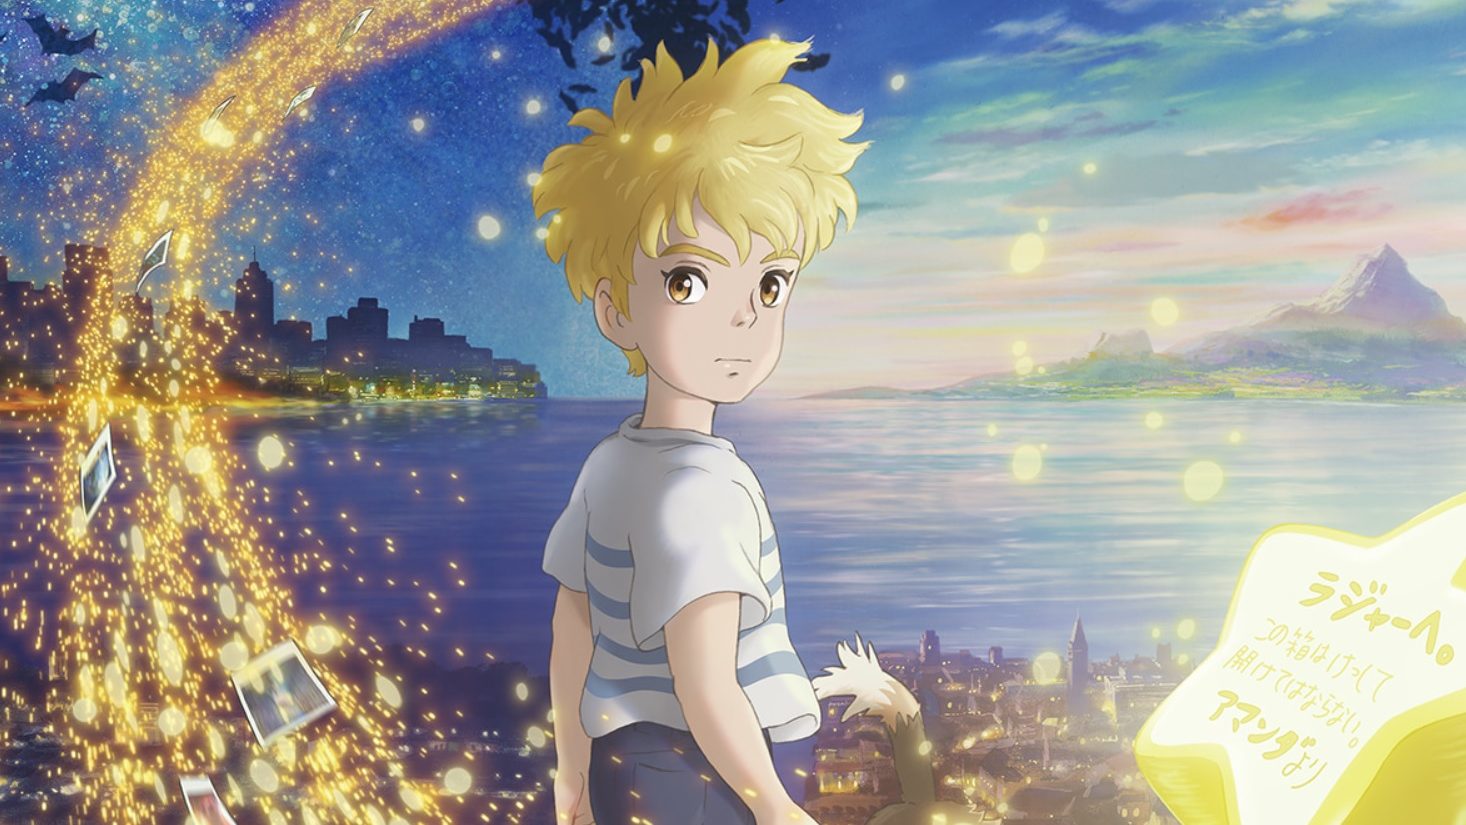 Netflix shares first trailer for 'Scott Pilgrim' anime series featuring  original cast